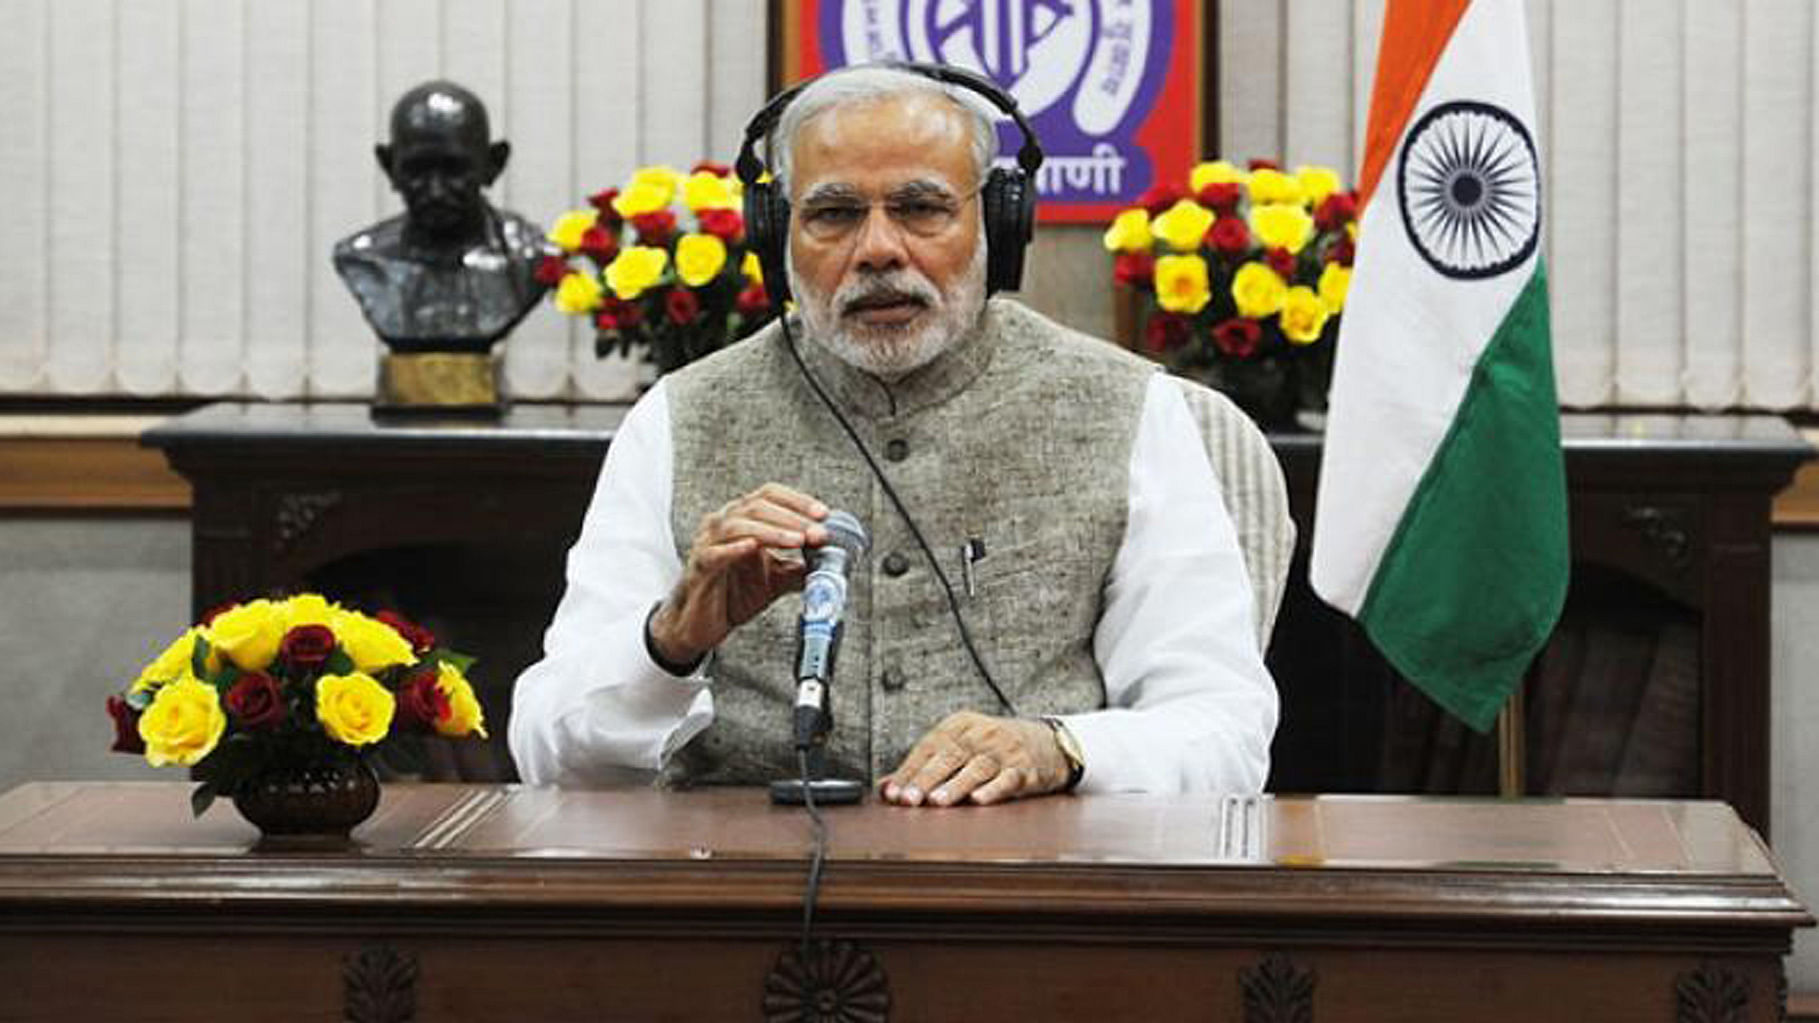 Prime Minister Narendra Modi addressing people on his radio programme ‘Mann Ki Baat’. Image used for representational purpose.